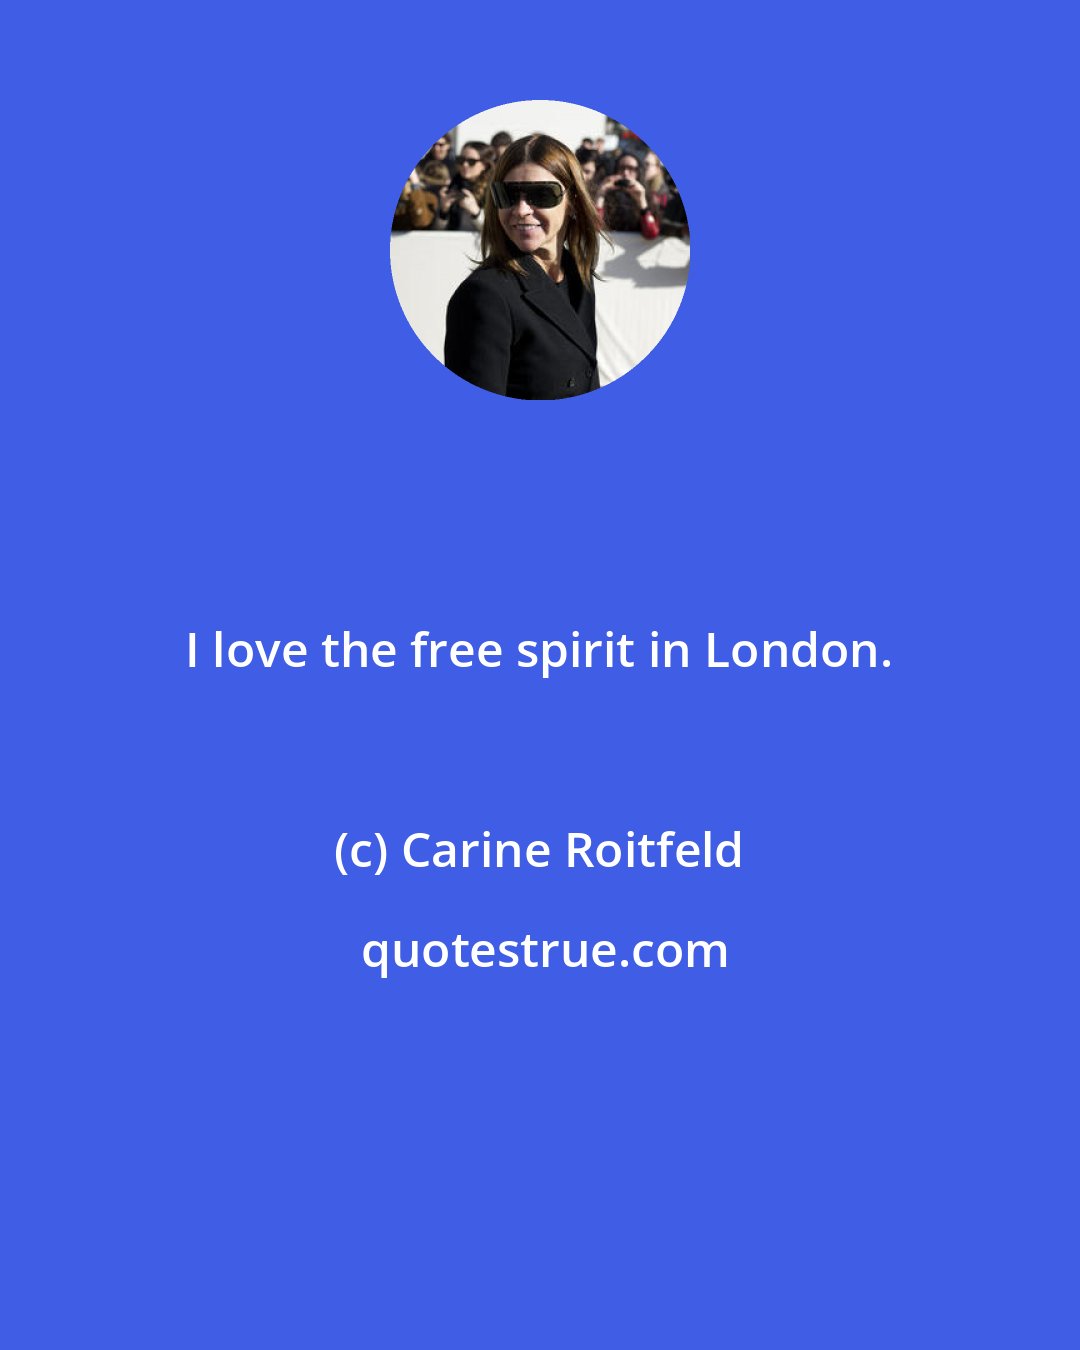 Carine Roitfeld: I love the free spirit in London.